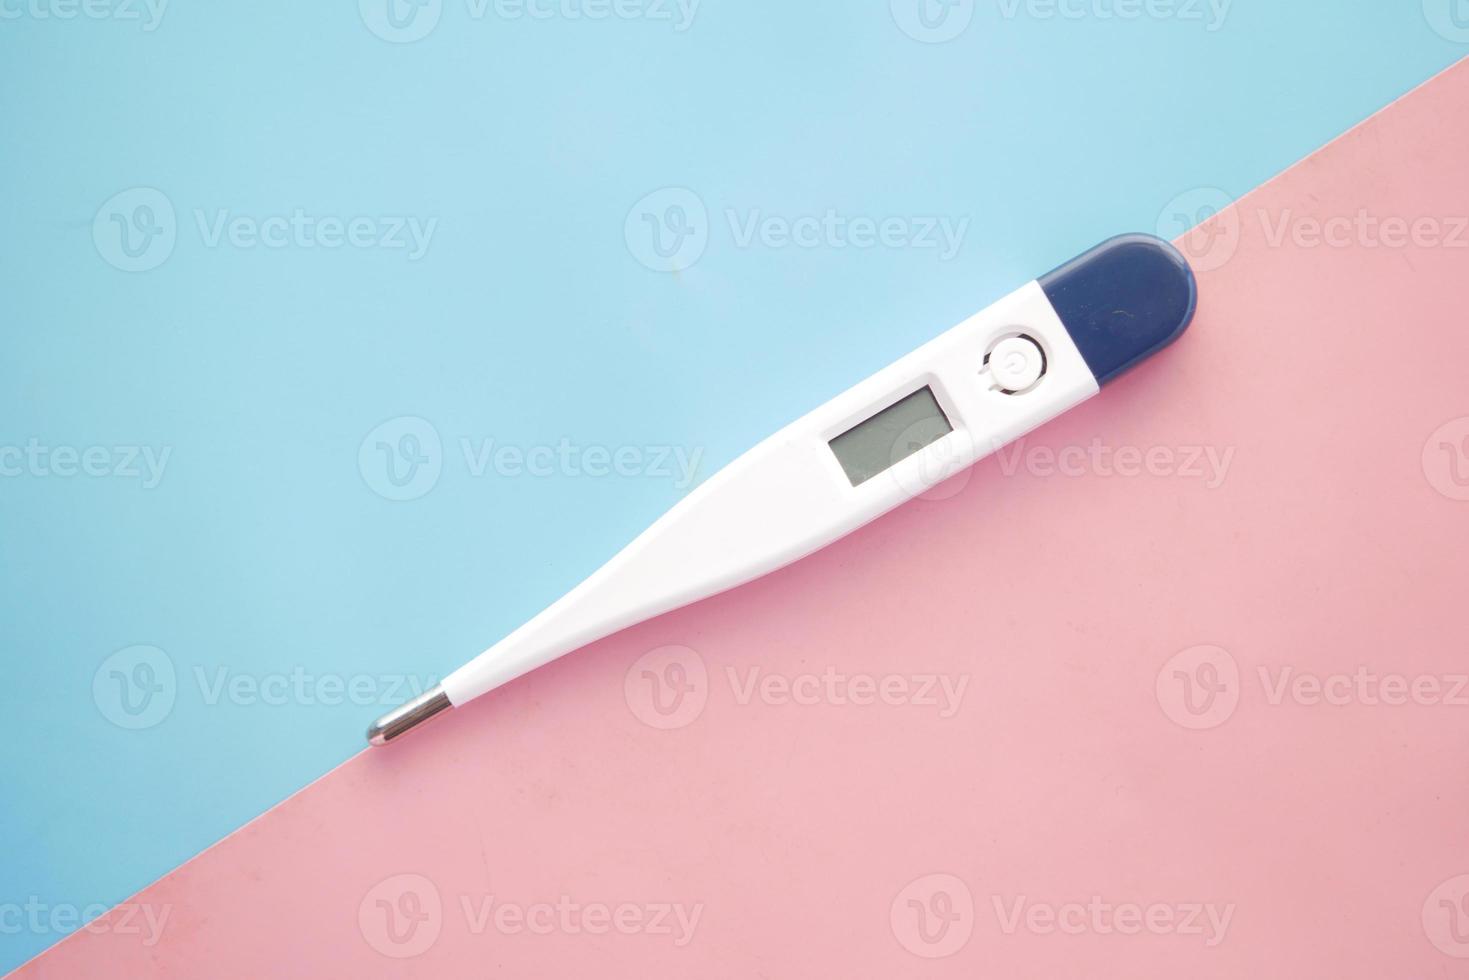 digital termometer på rosa bakgrund med kopieringsutrymme foto